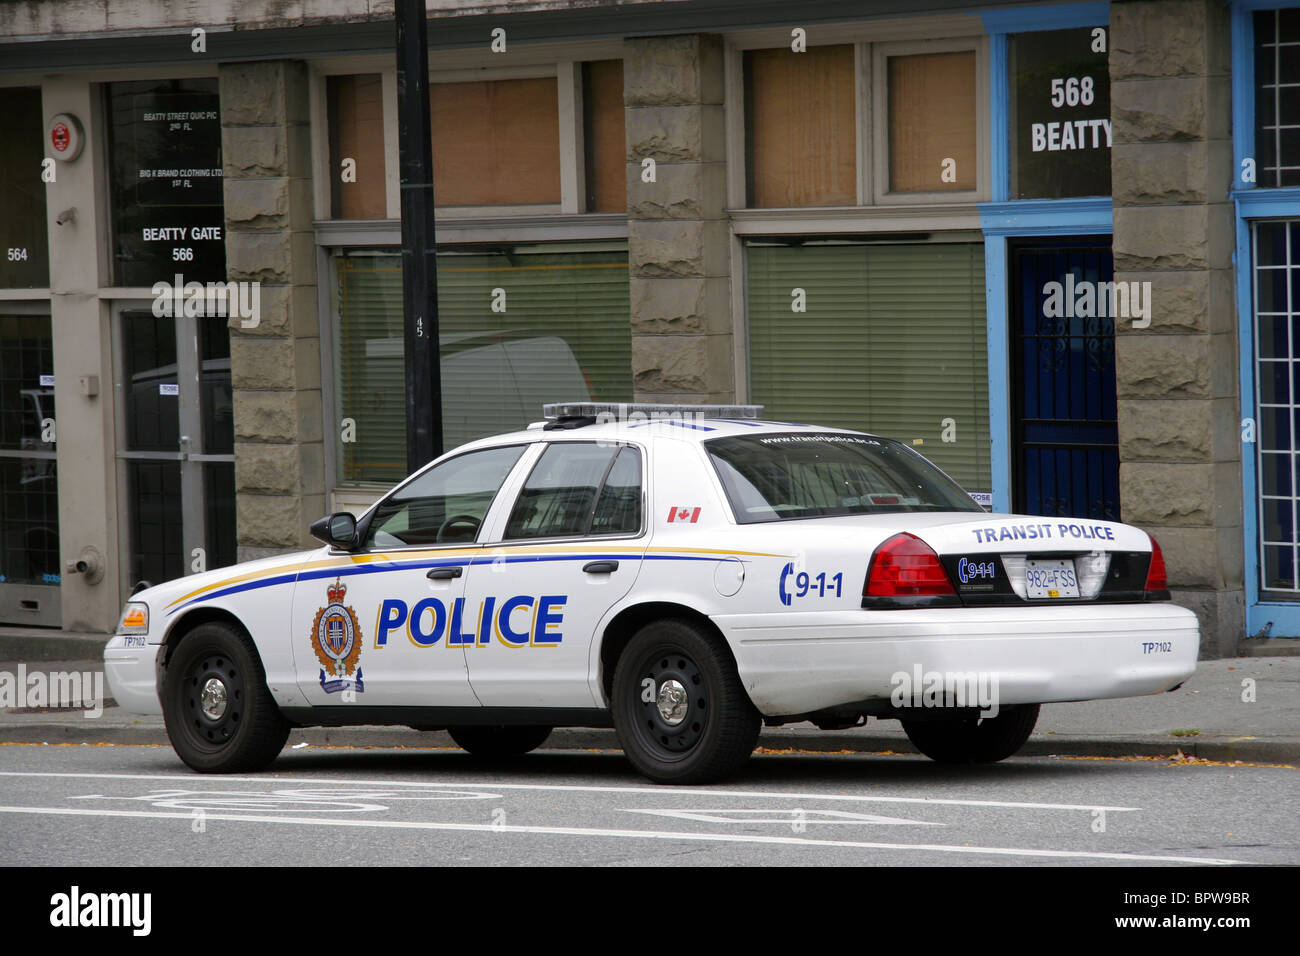 Transit police car, Vancouver, British Columbia, Canada Stock Photo